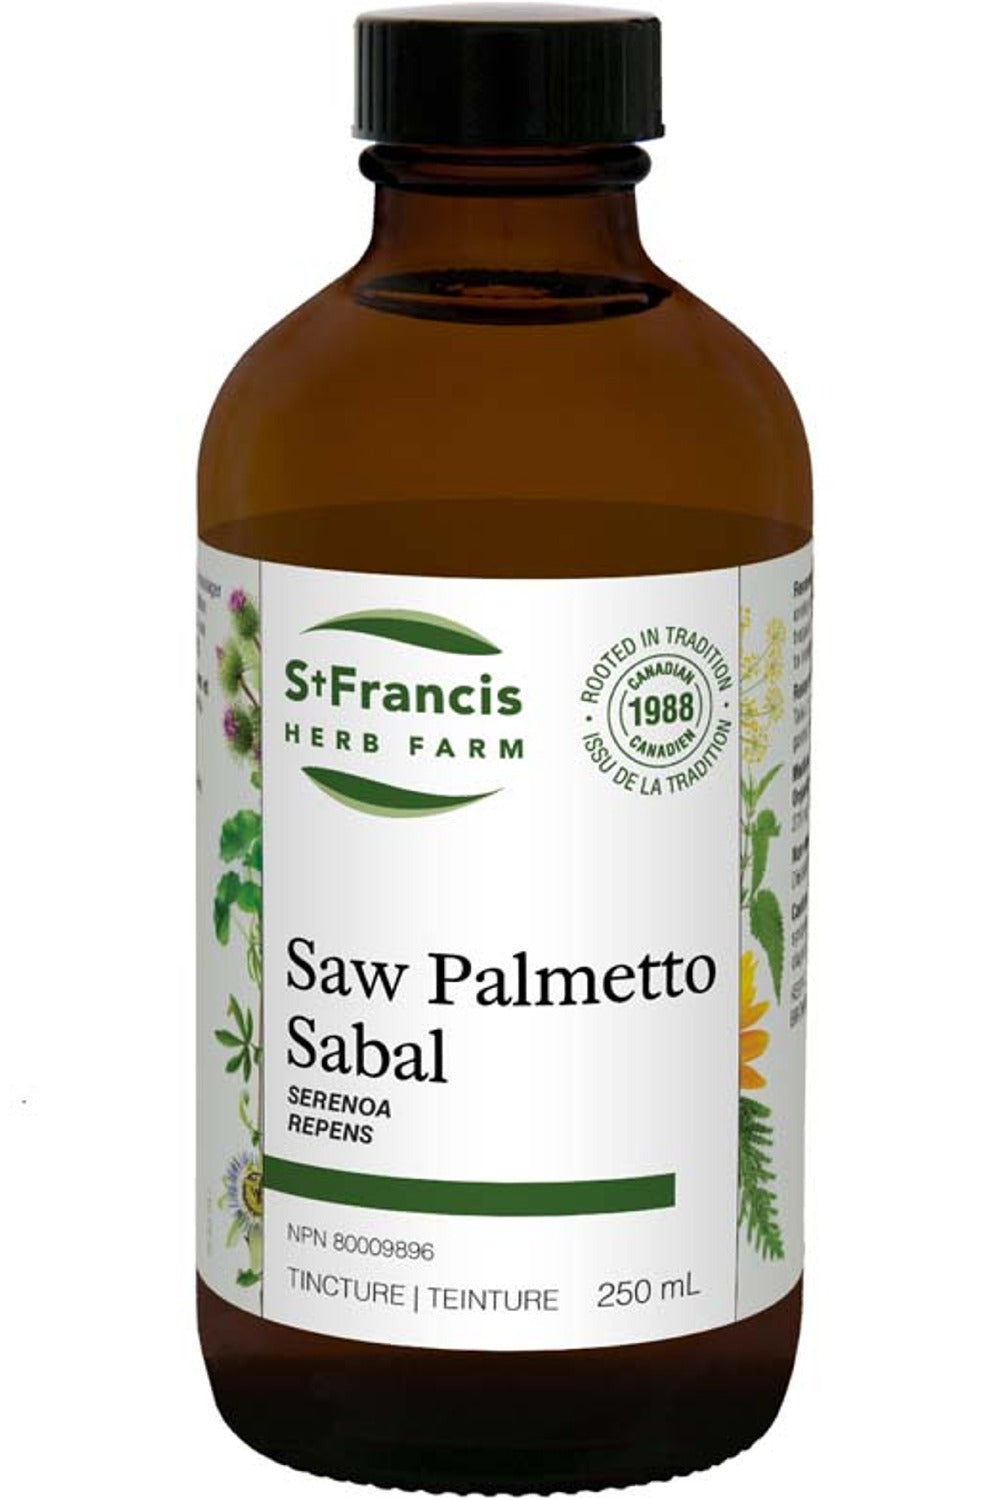 ST FRANCIS HERB FARM Saw Palmetto (250 ml)